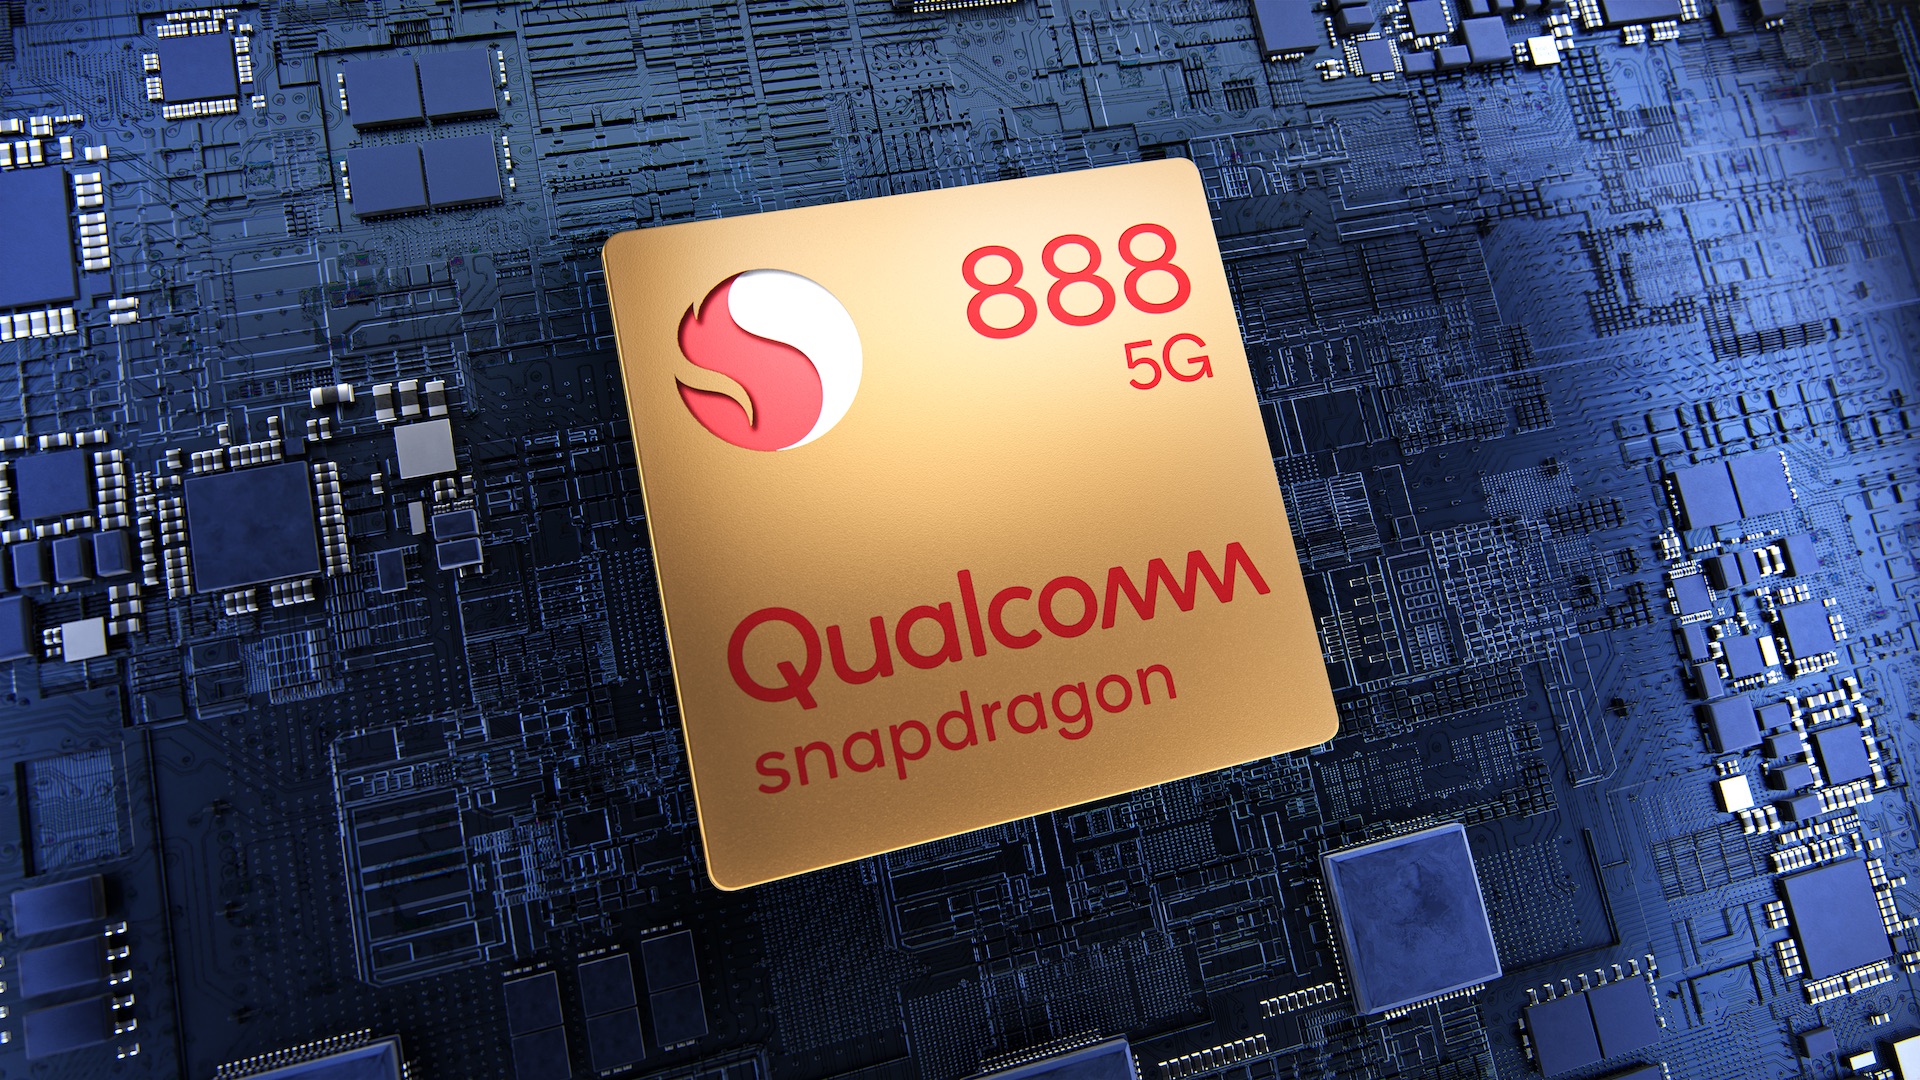 Dessa mobiler får nya Snapdragon 888 processorn